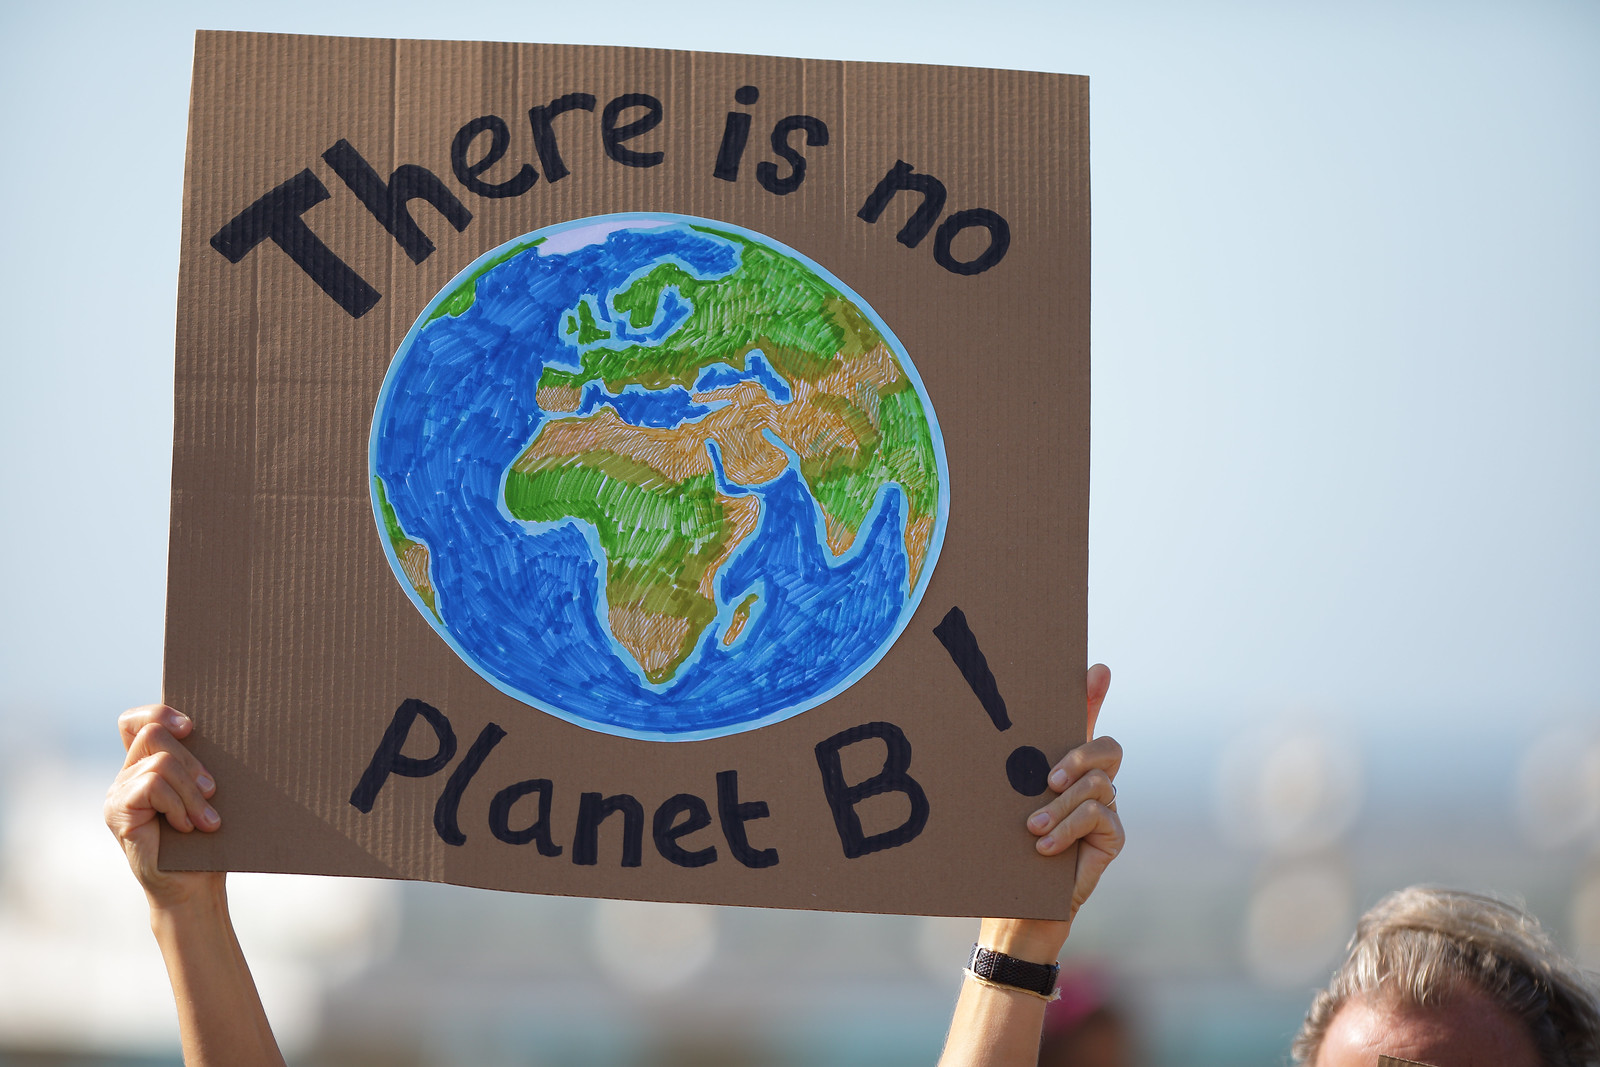 Brighton_Global_Climate_Strike_September_2019_Placard_PlanetB